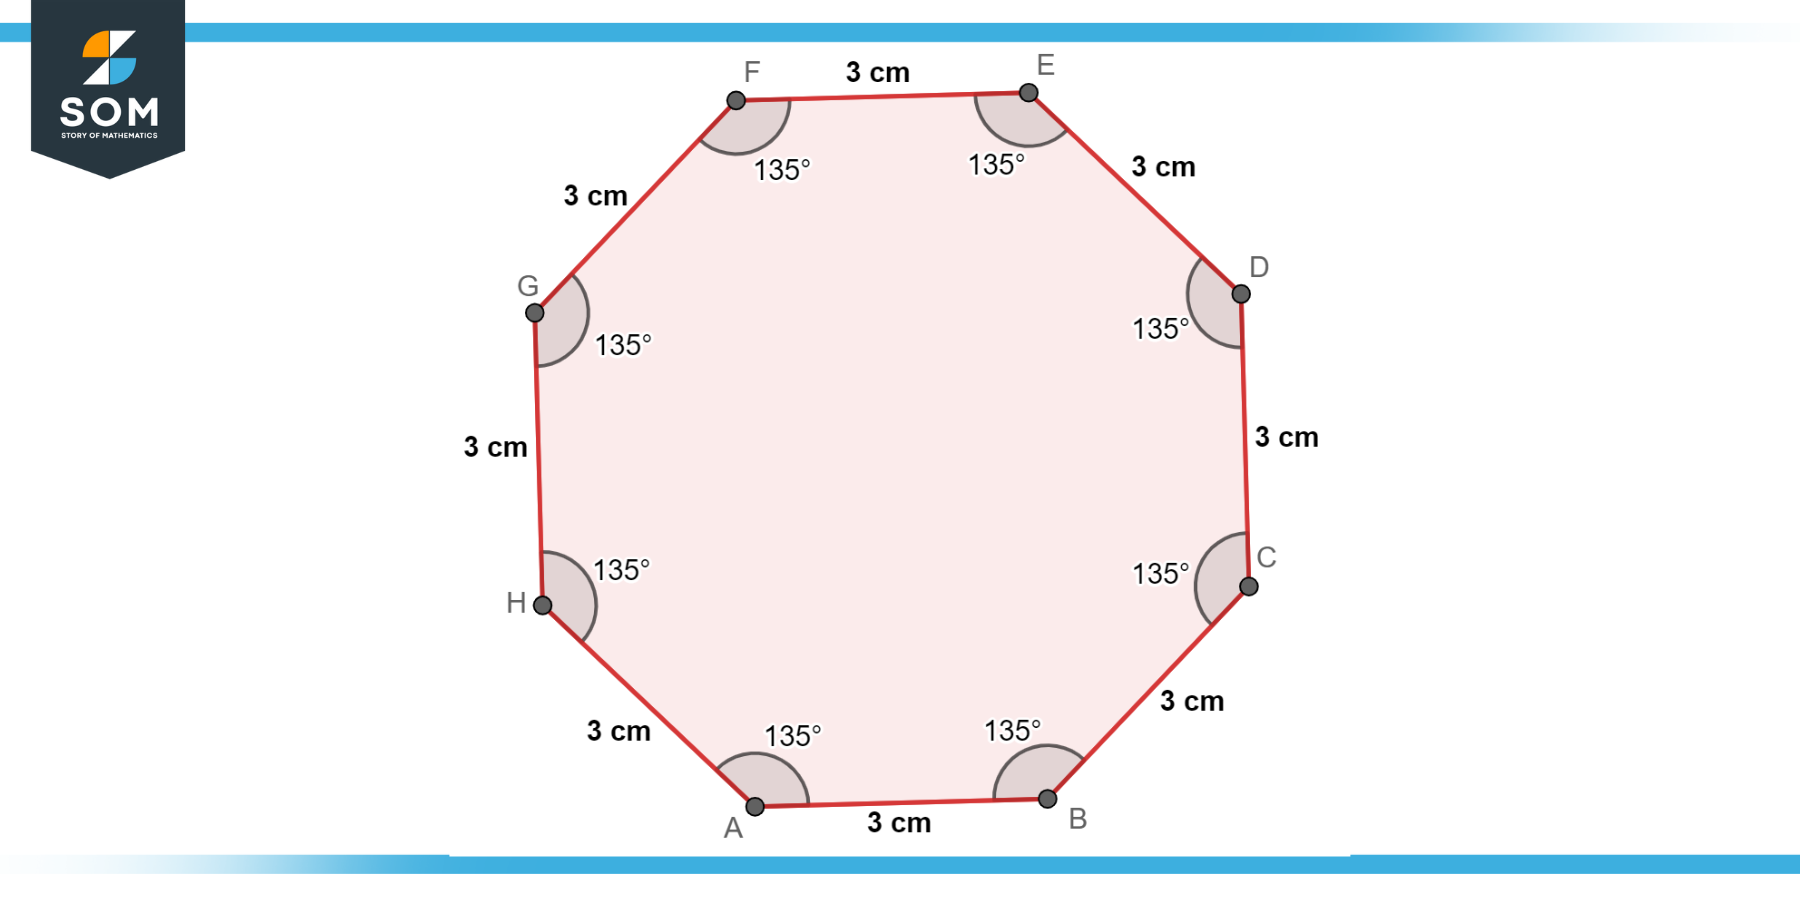 Octagon A H Regular side 3 cm